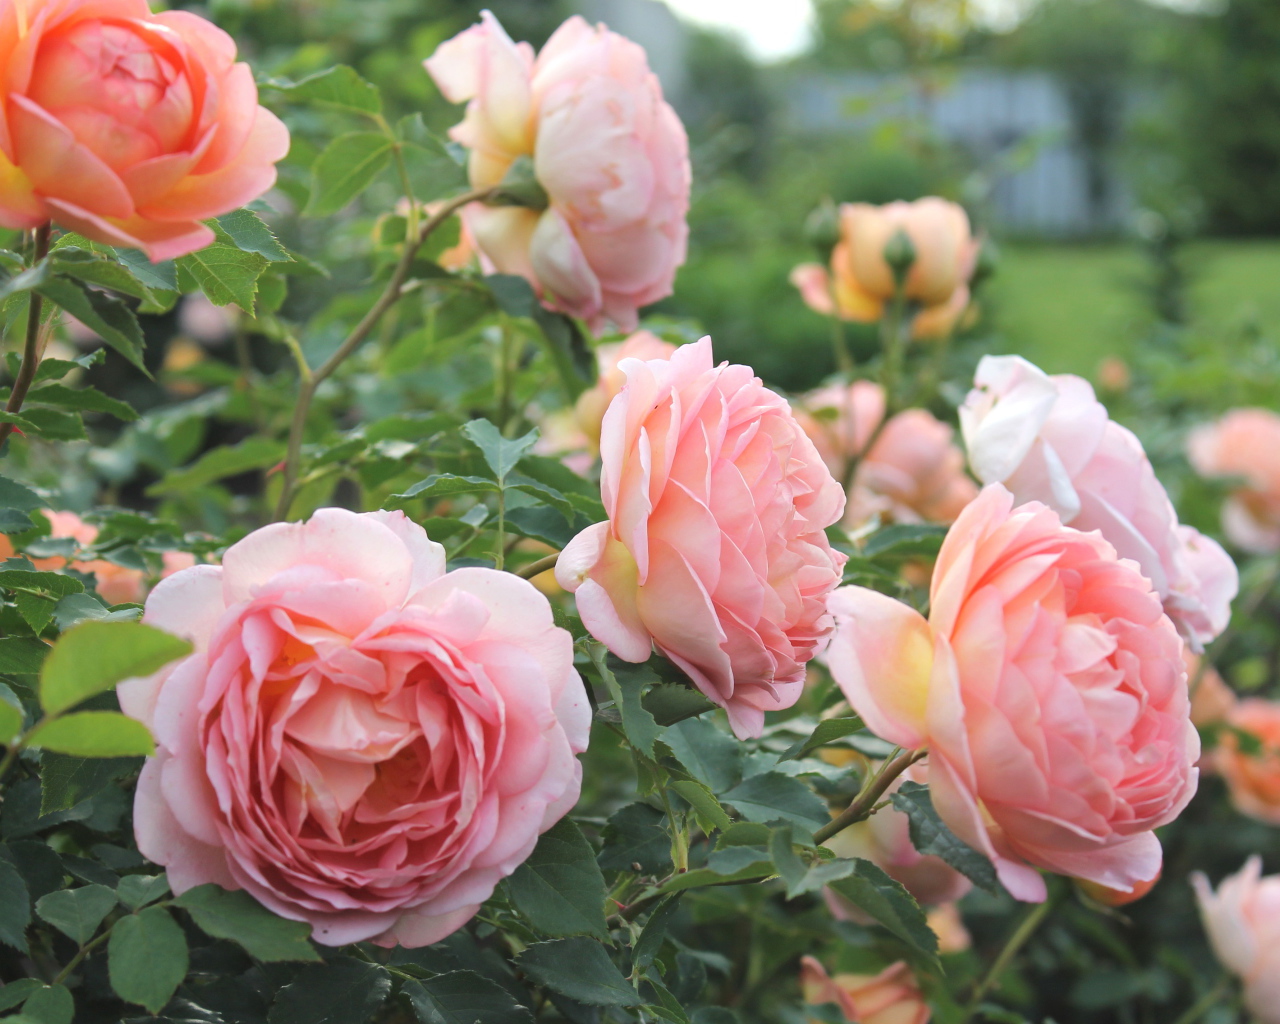 Beautiful rose bush in the garden